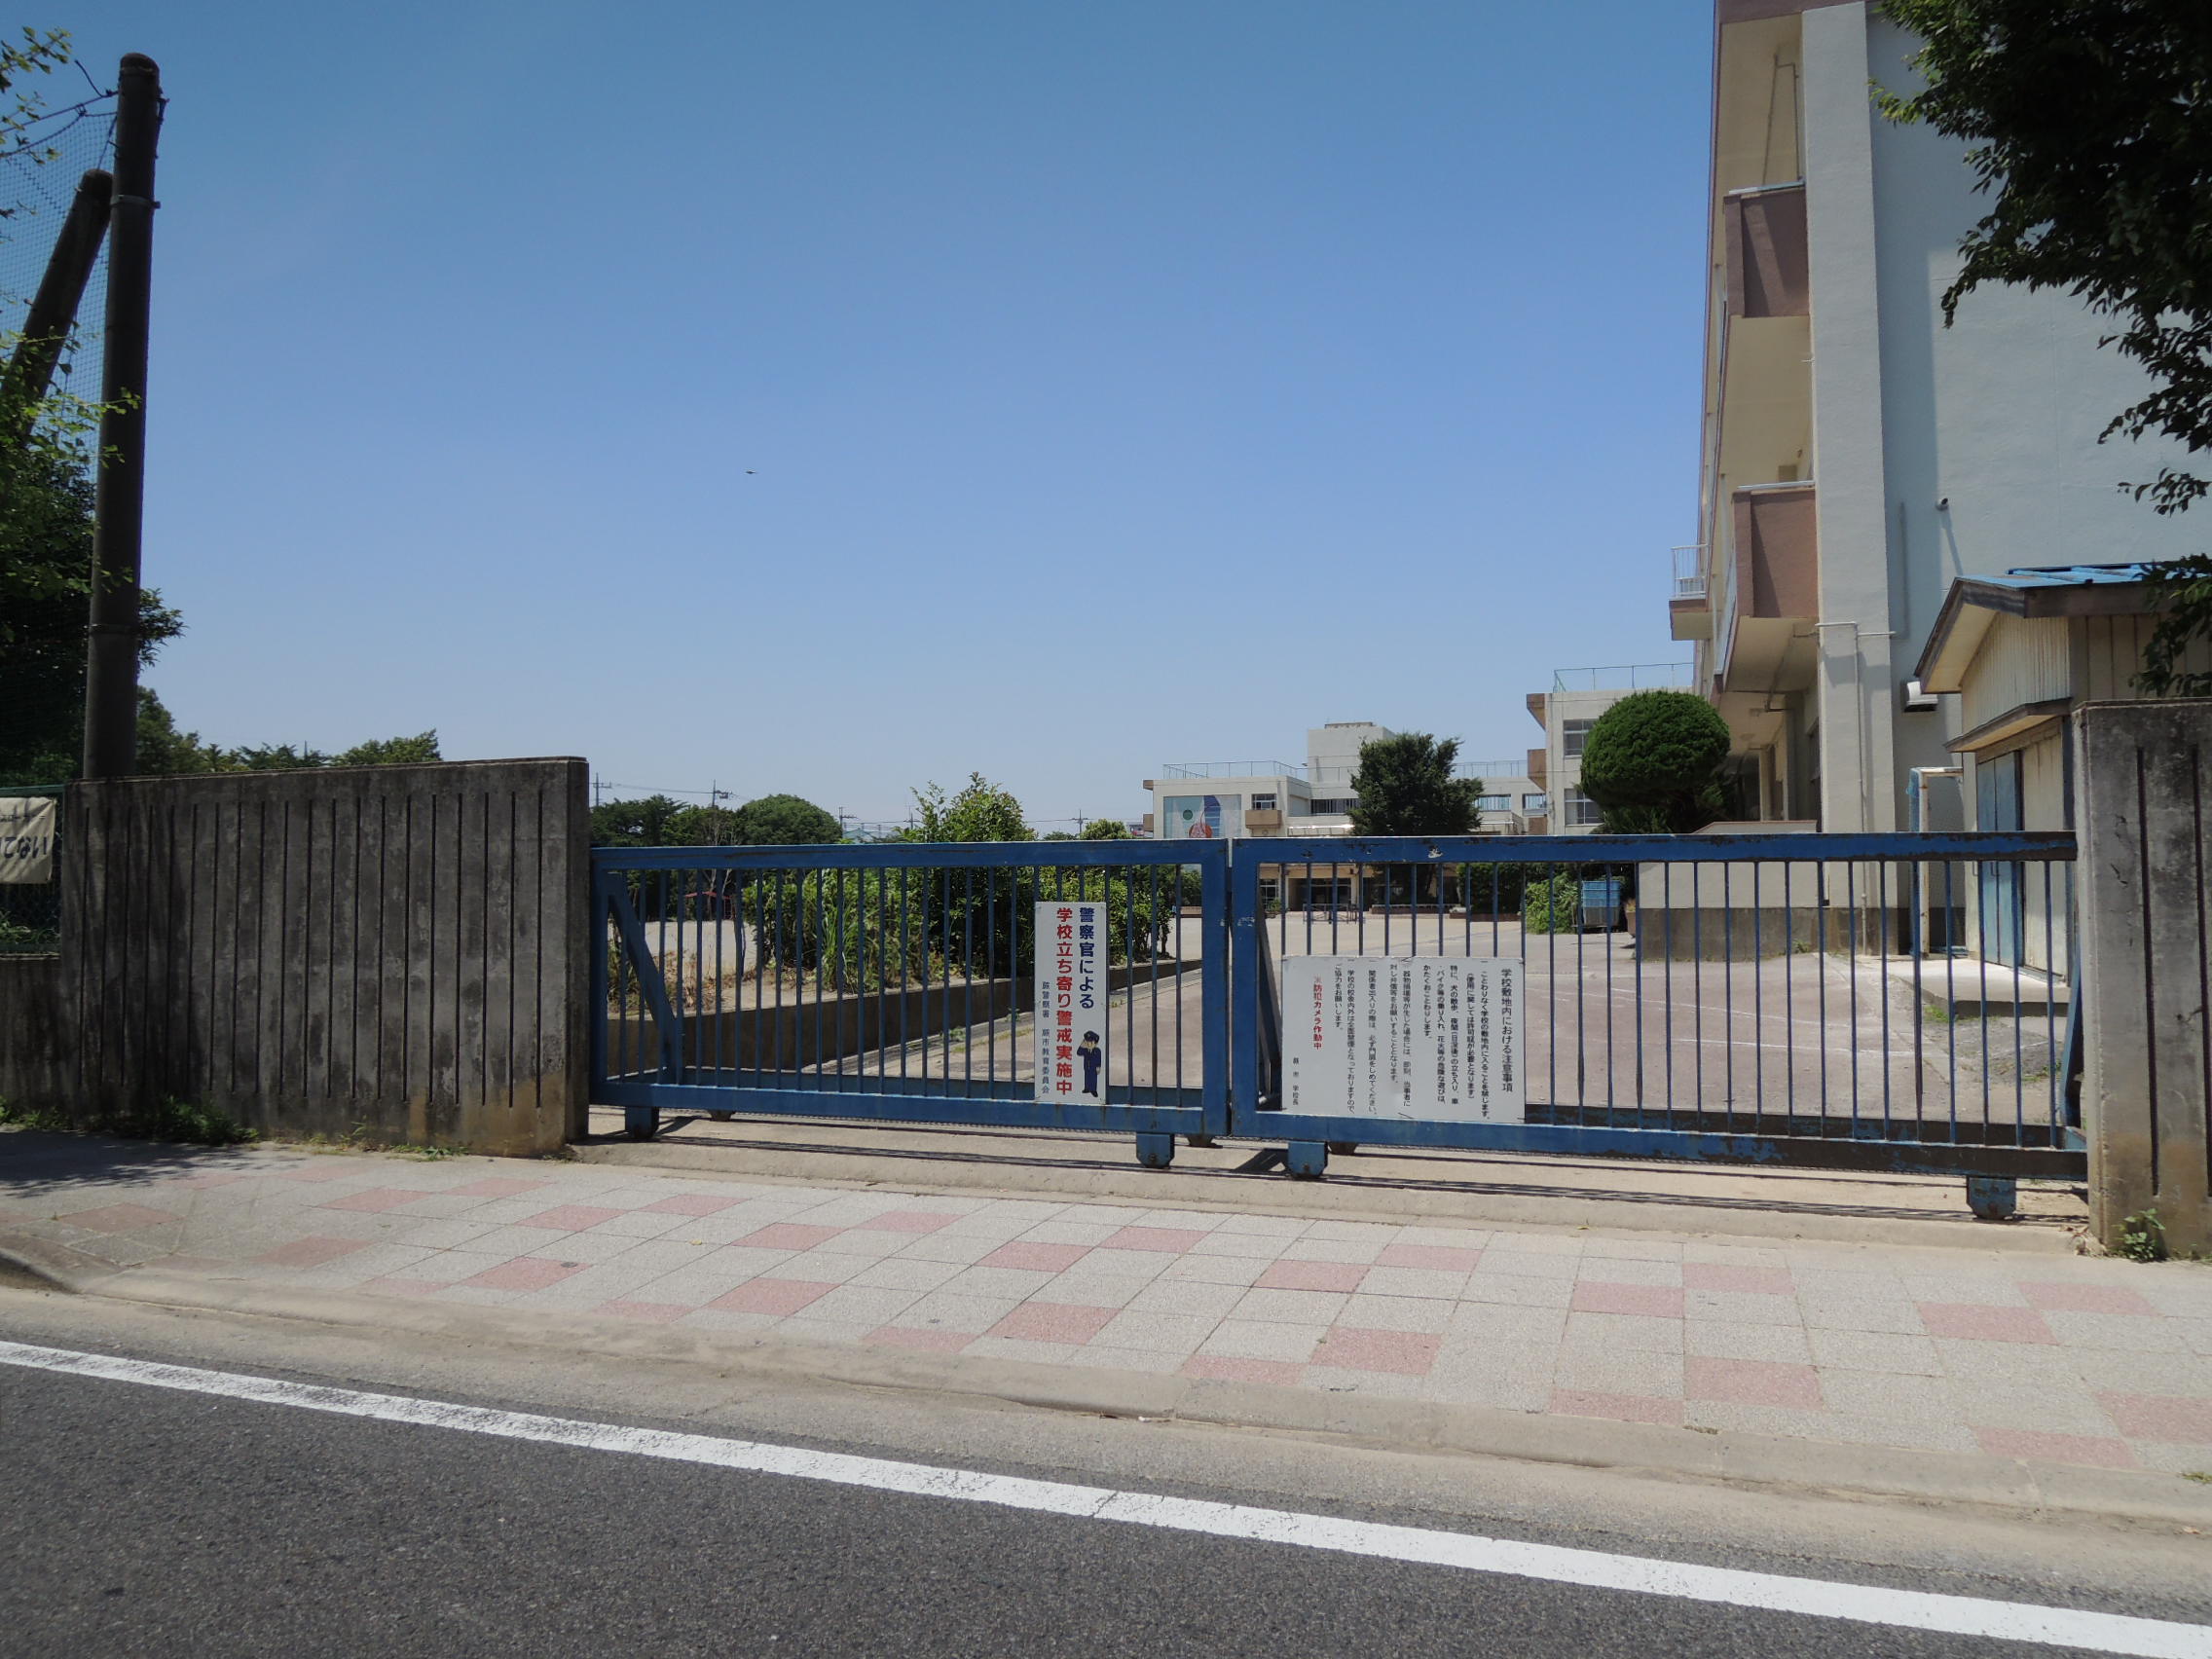 Primary school. Warabi Minami to elementary school (elementary school) 240m